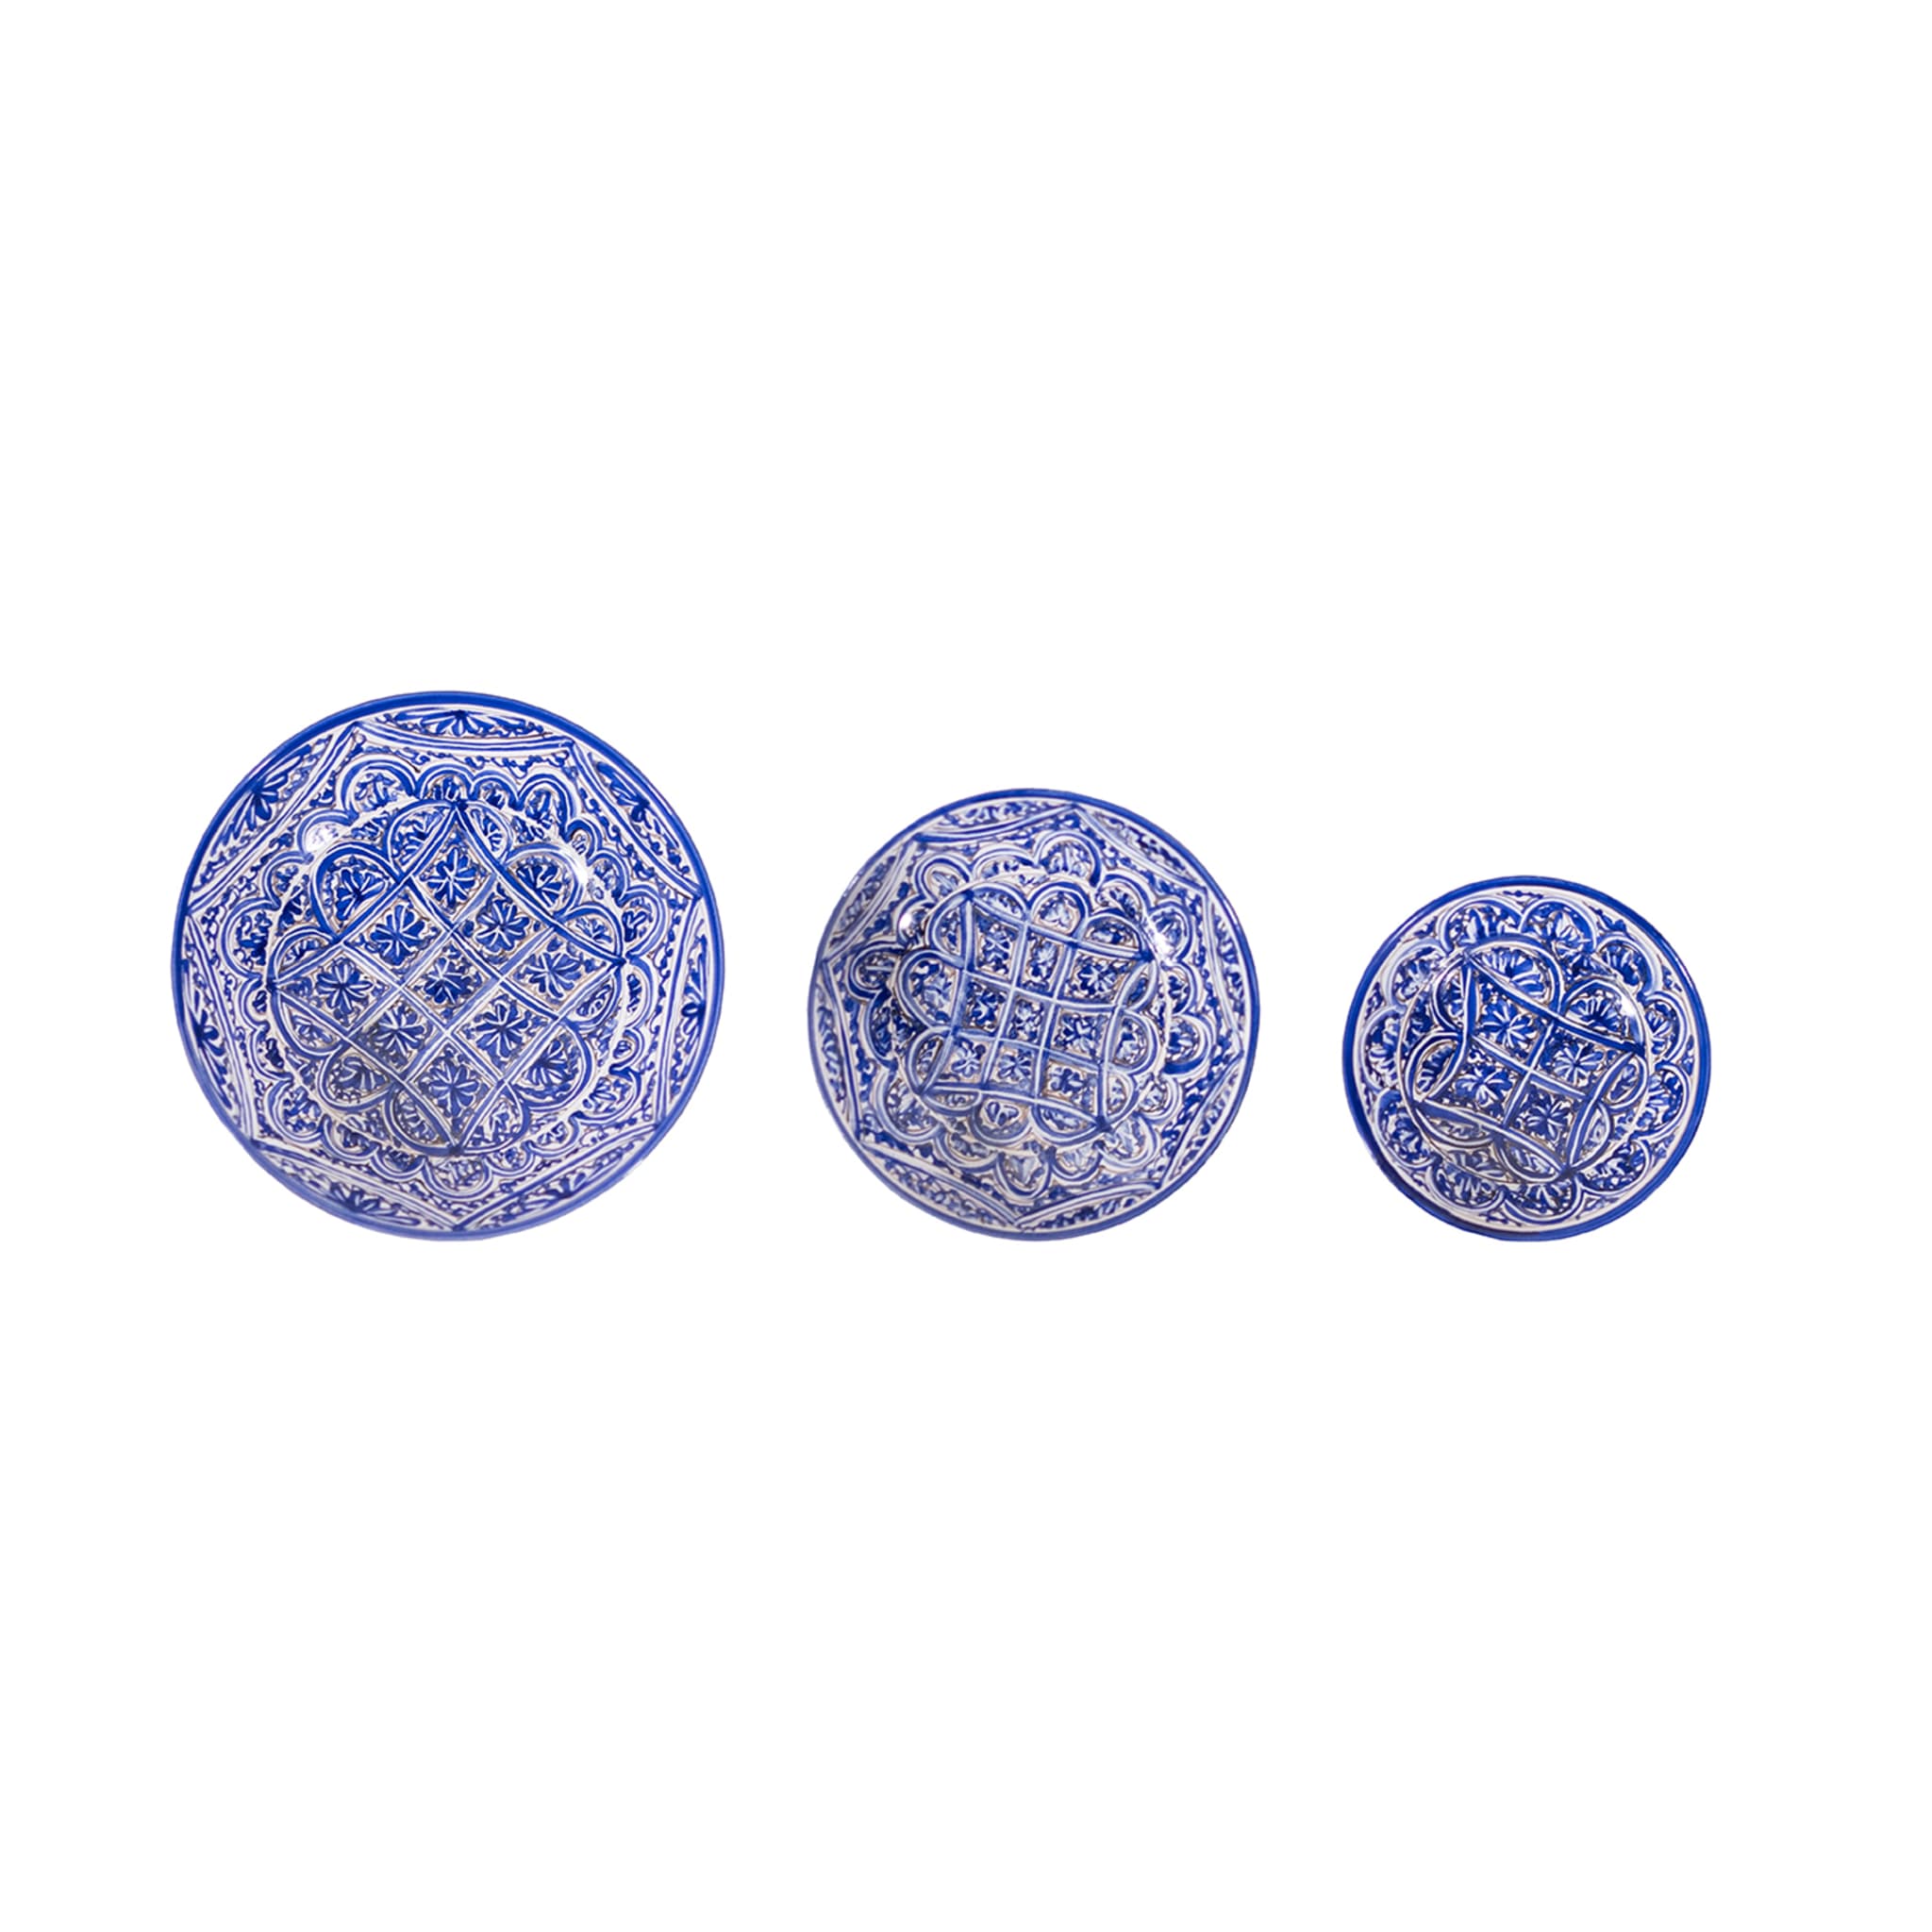 Arabeschi Blu Set of 3 Bowls by Lorenza Adami - Alternative view 1